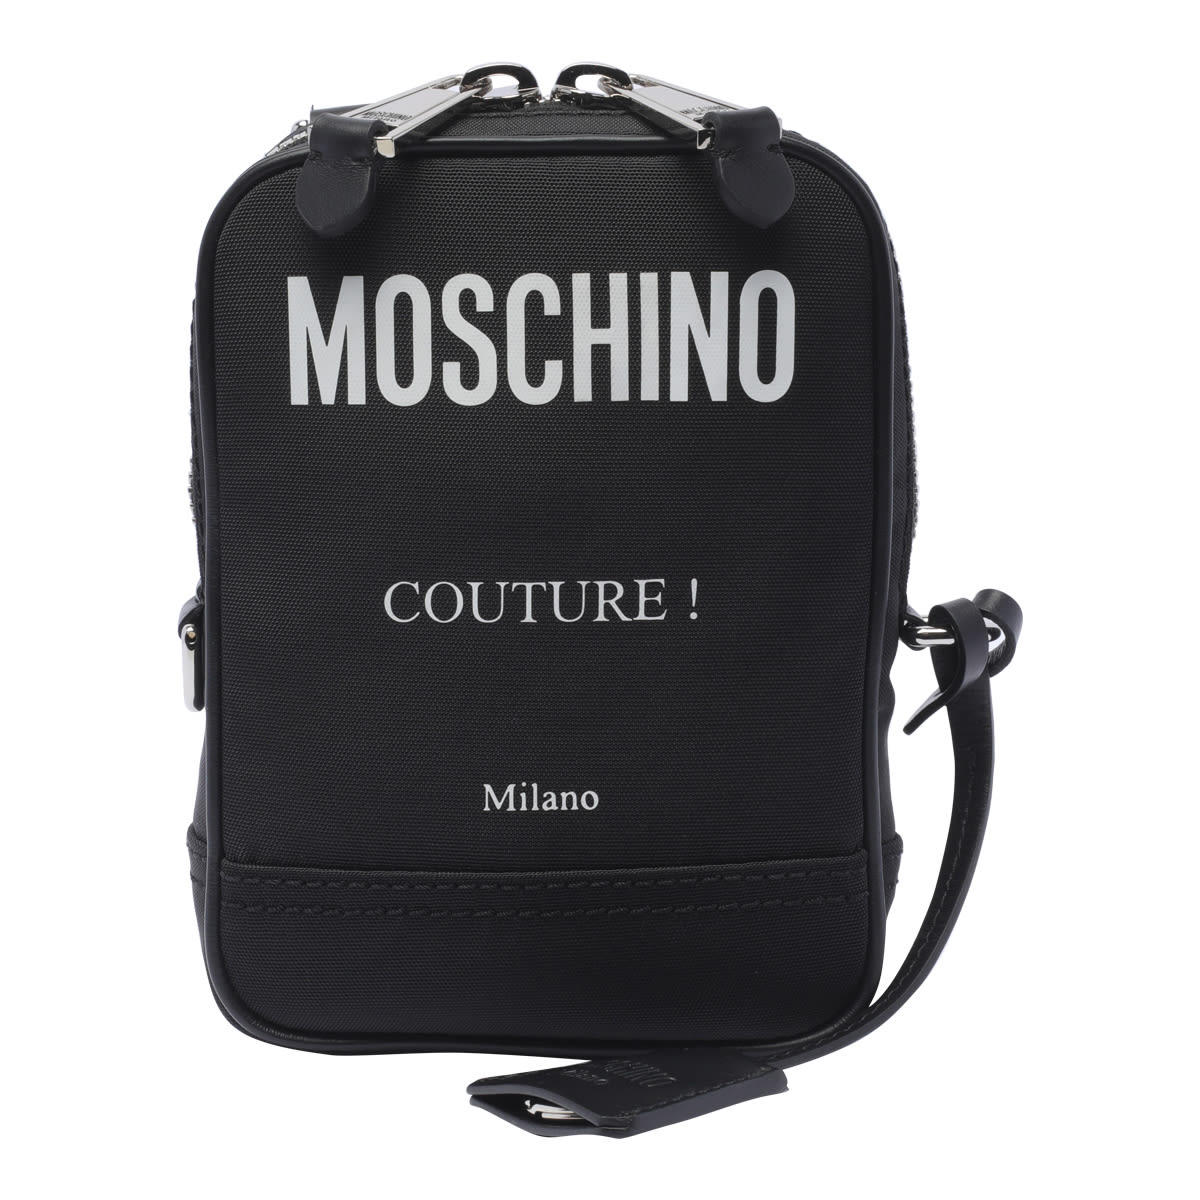 Couture Messenger Bag